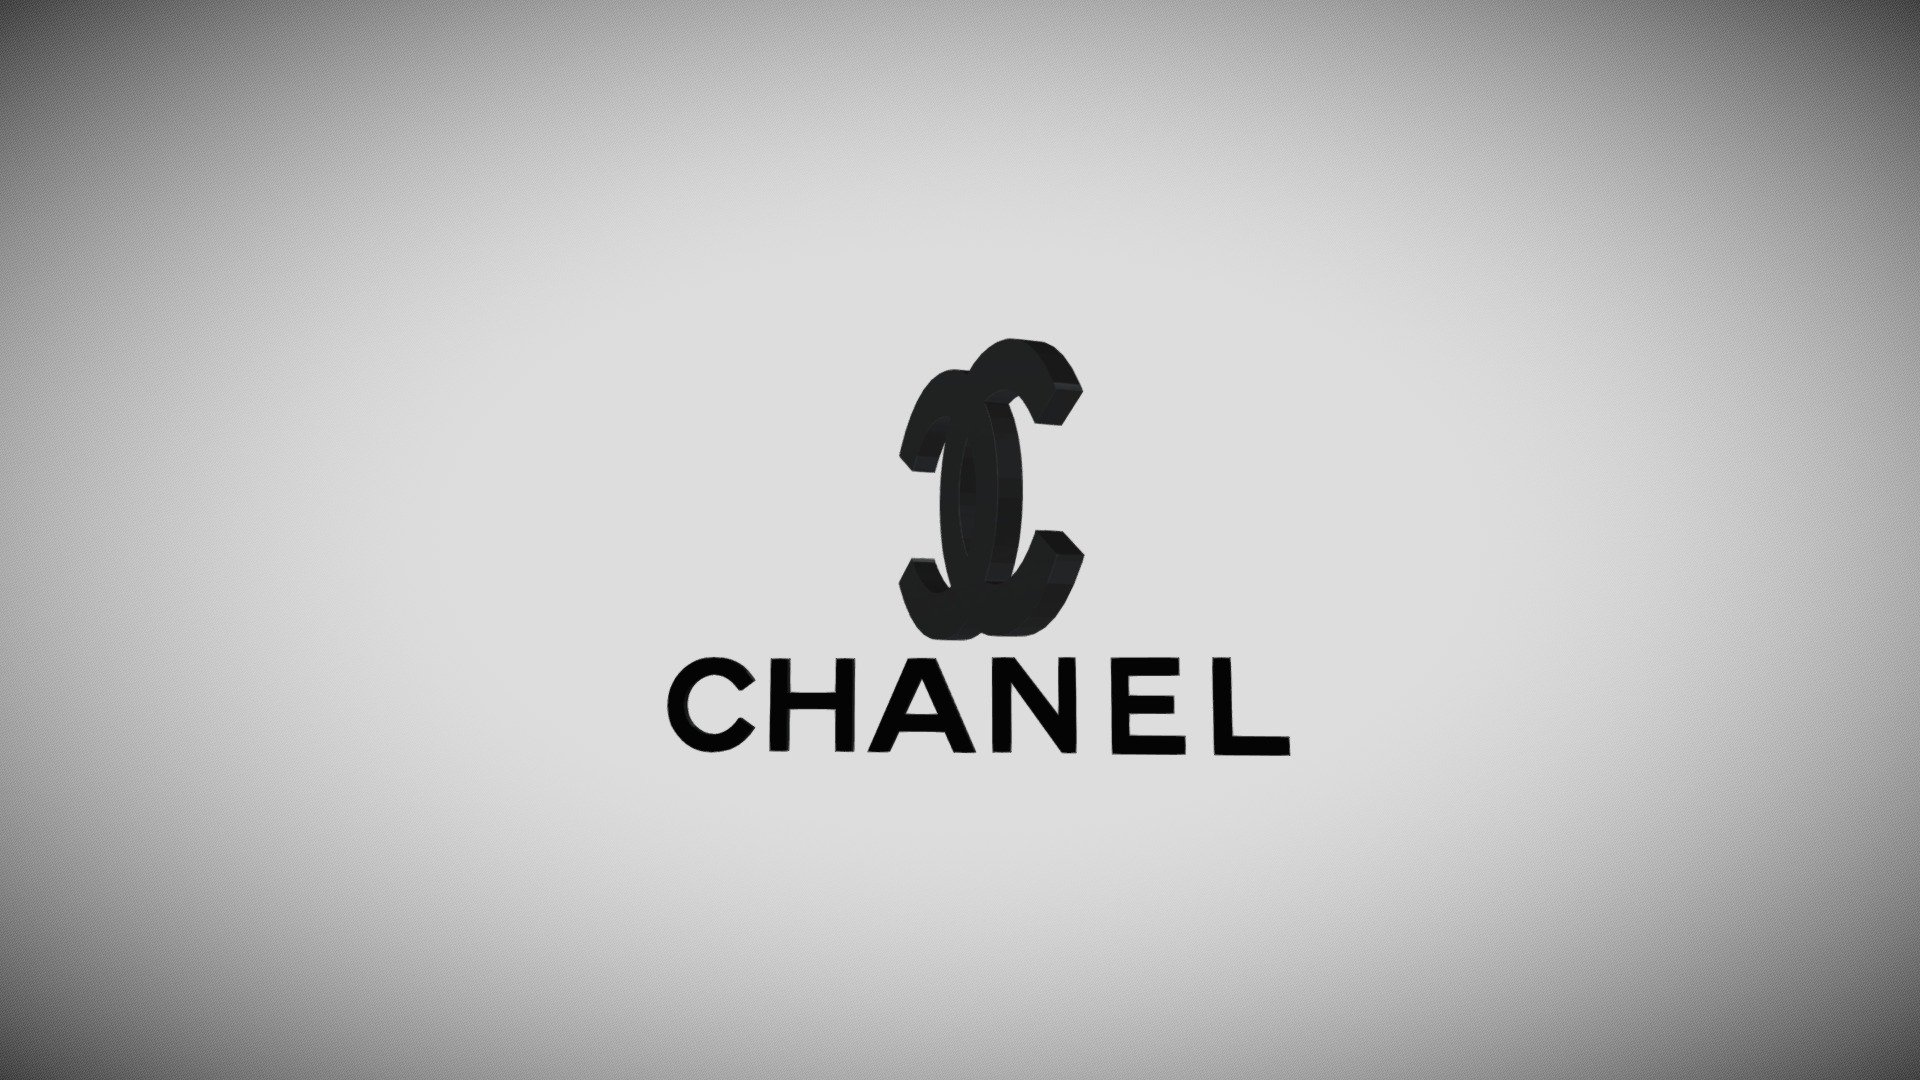 Karl Lagerfeld 7 ways the Chanel designer transformed the fashion world